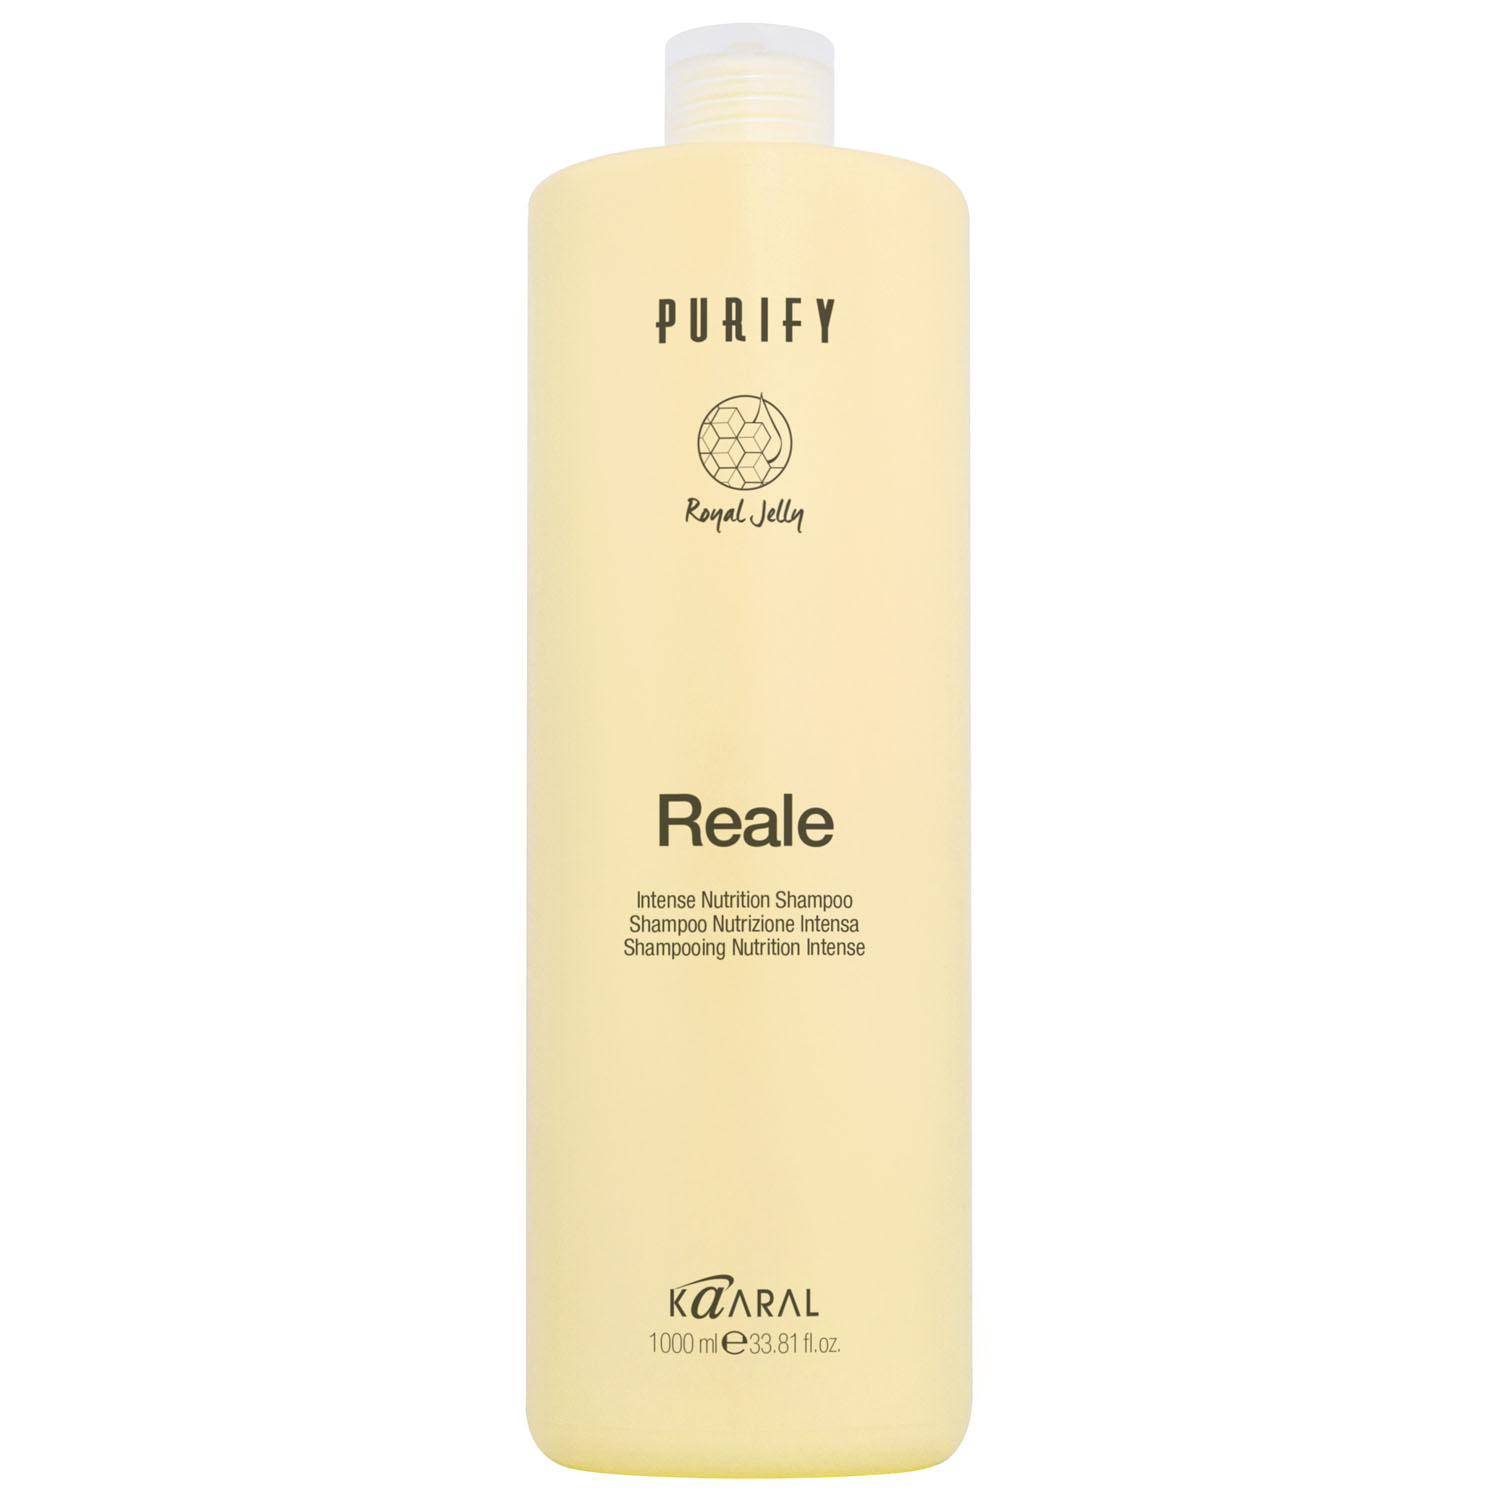 Kaaral Восстанавливающий шампунь для поврежденных волос Intense Nutrition Shampoo, 1000 мл (Kaaral, Purify)